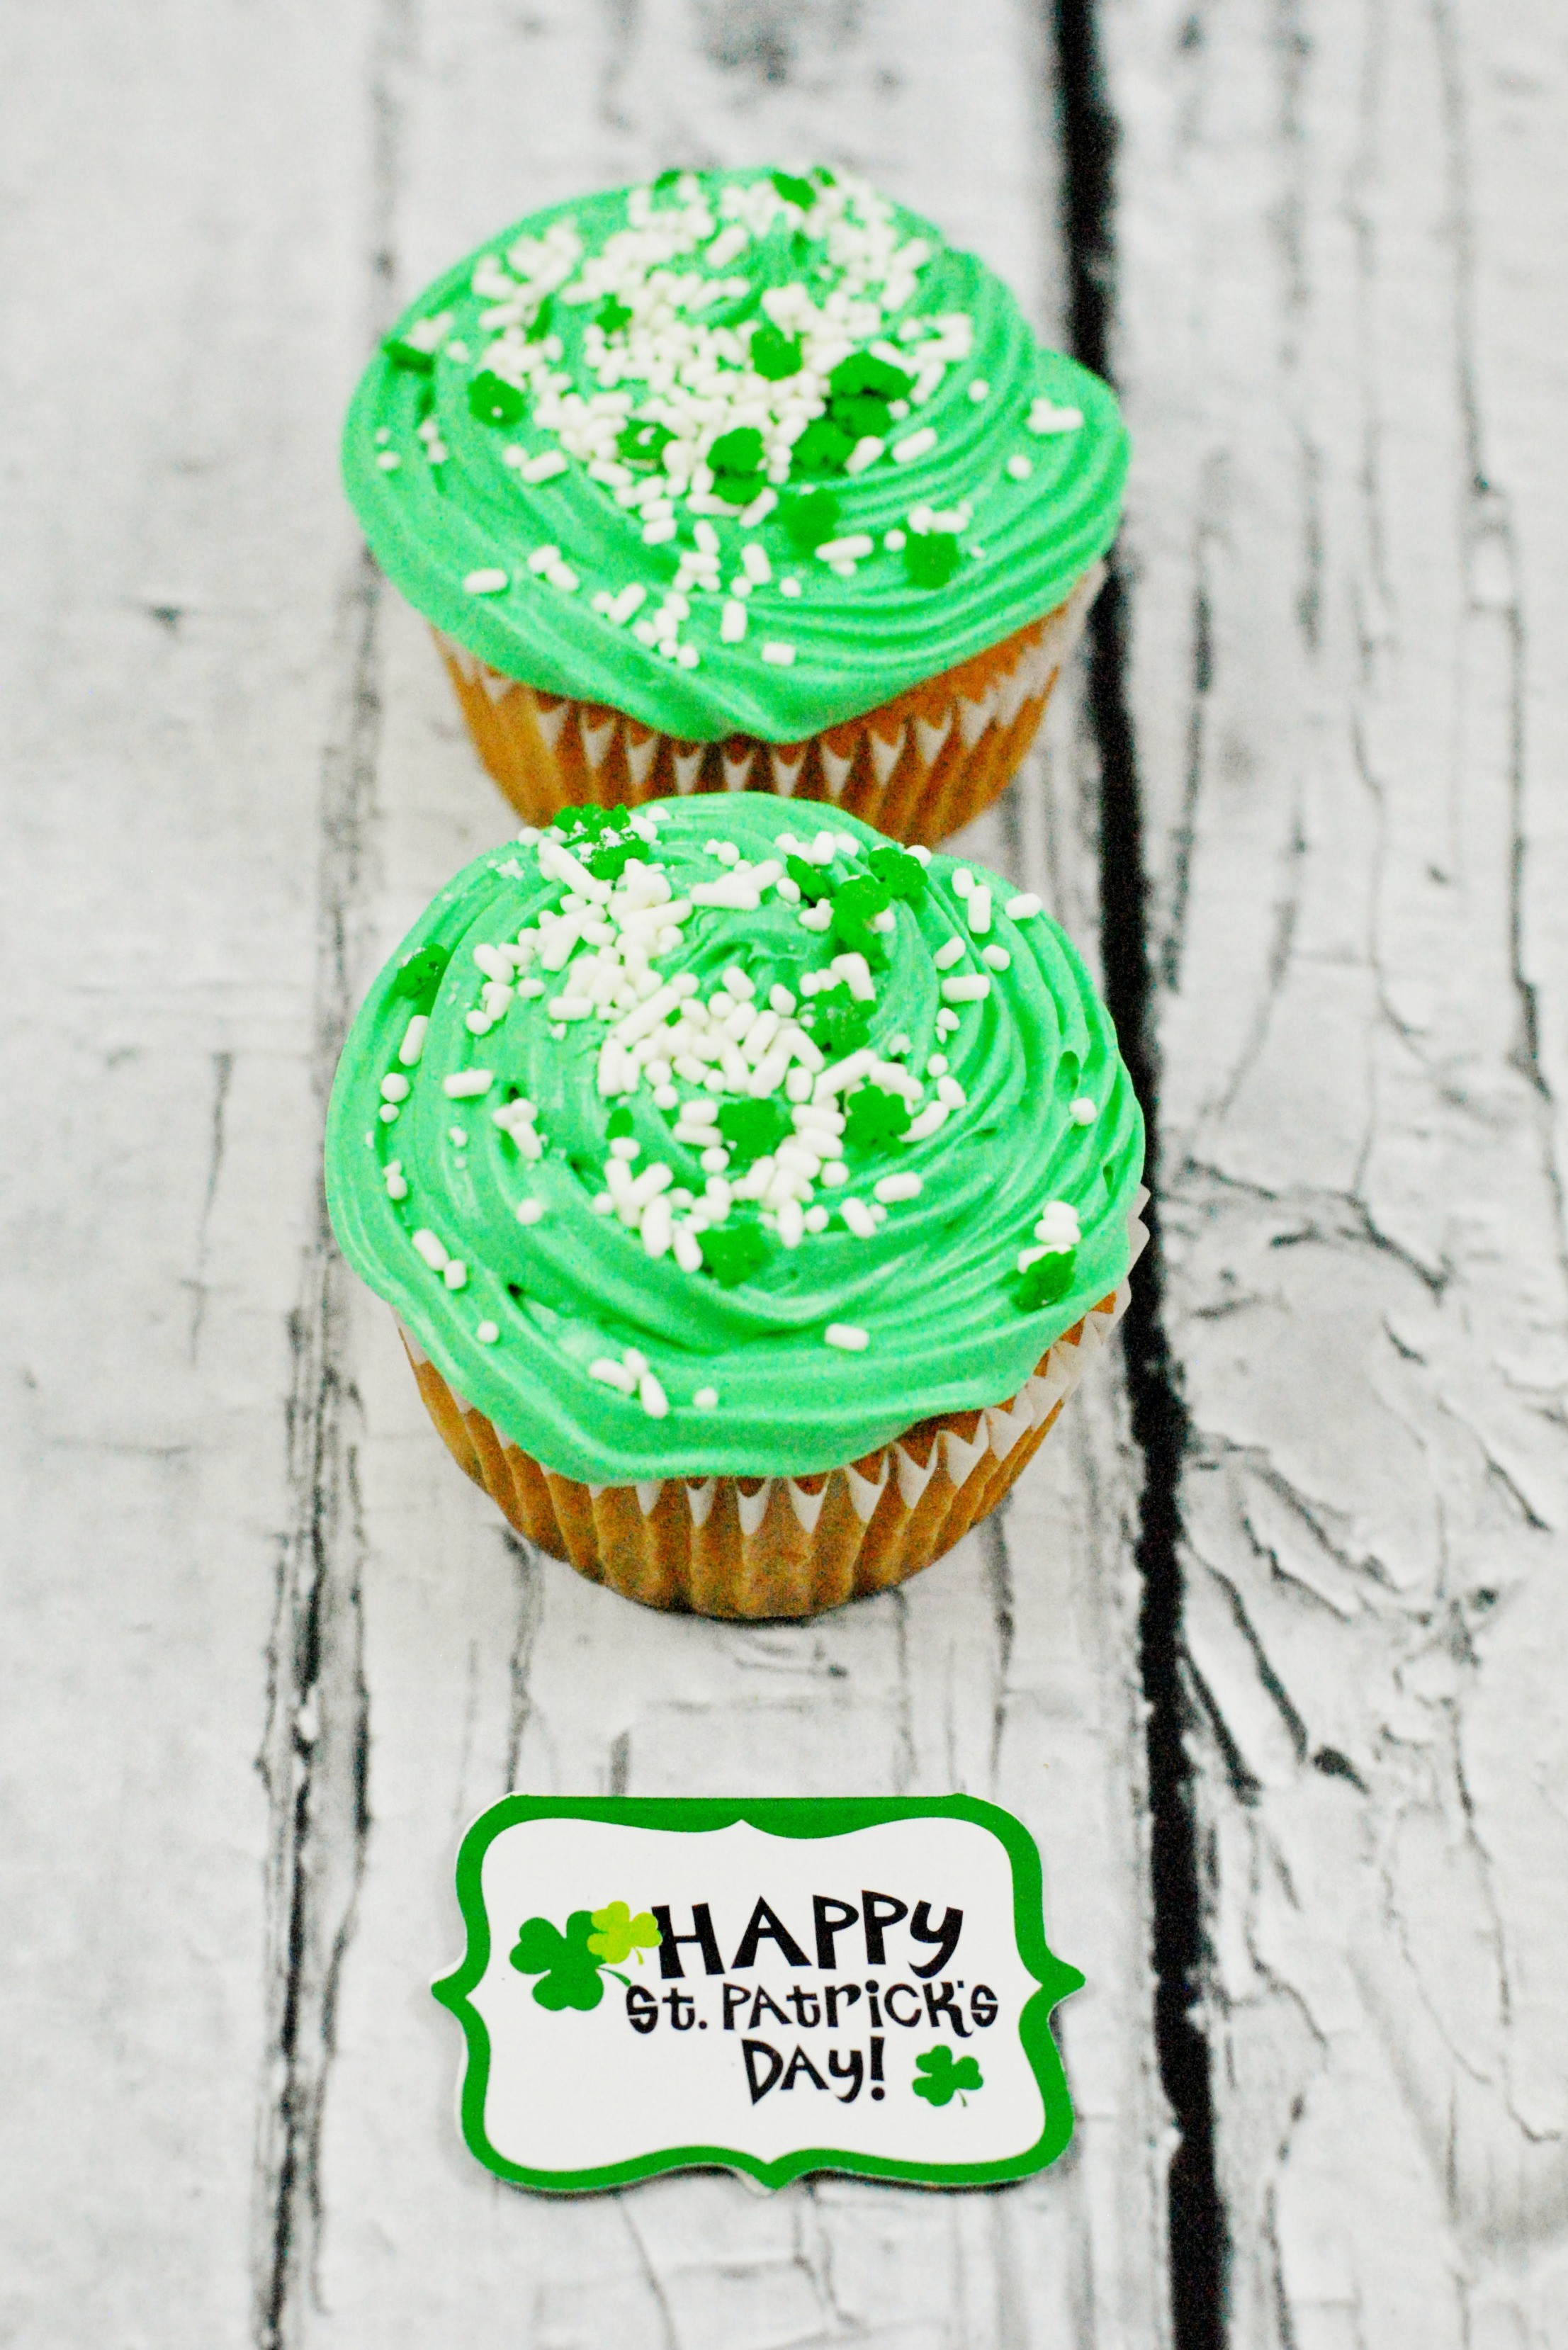 St. Patrick’s Day Surprise Inside Cupcake Recipe